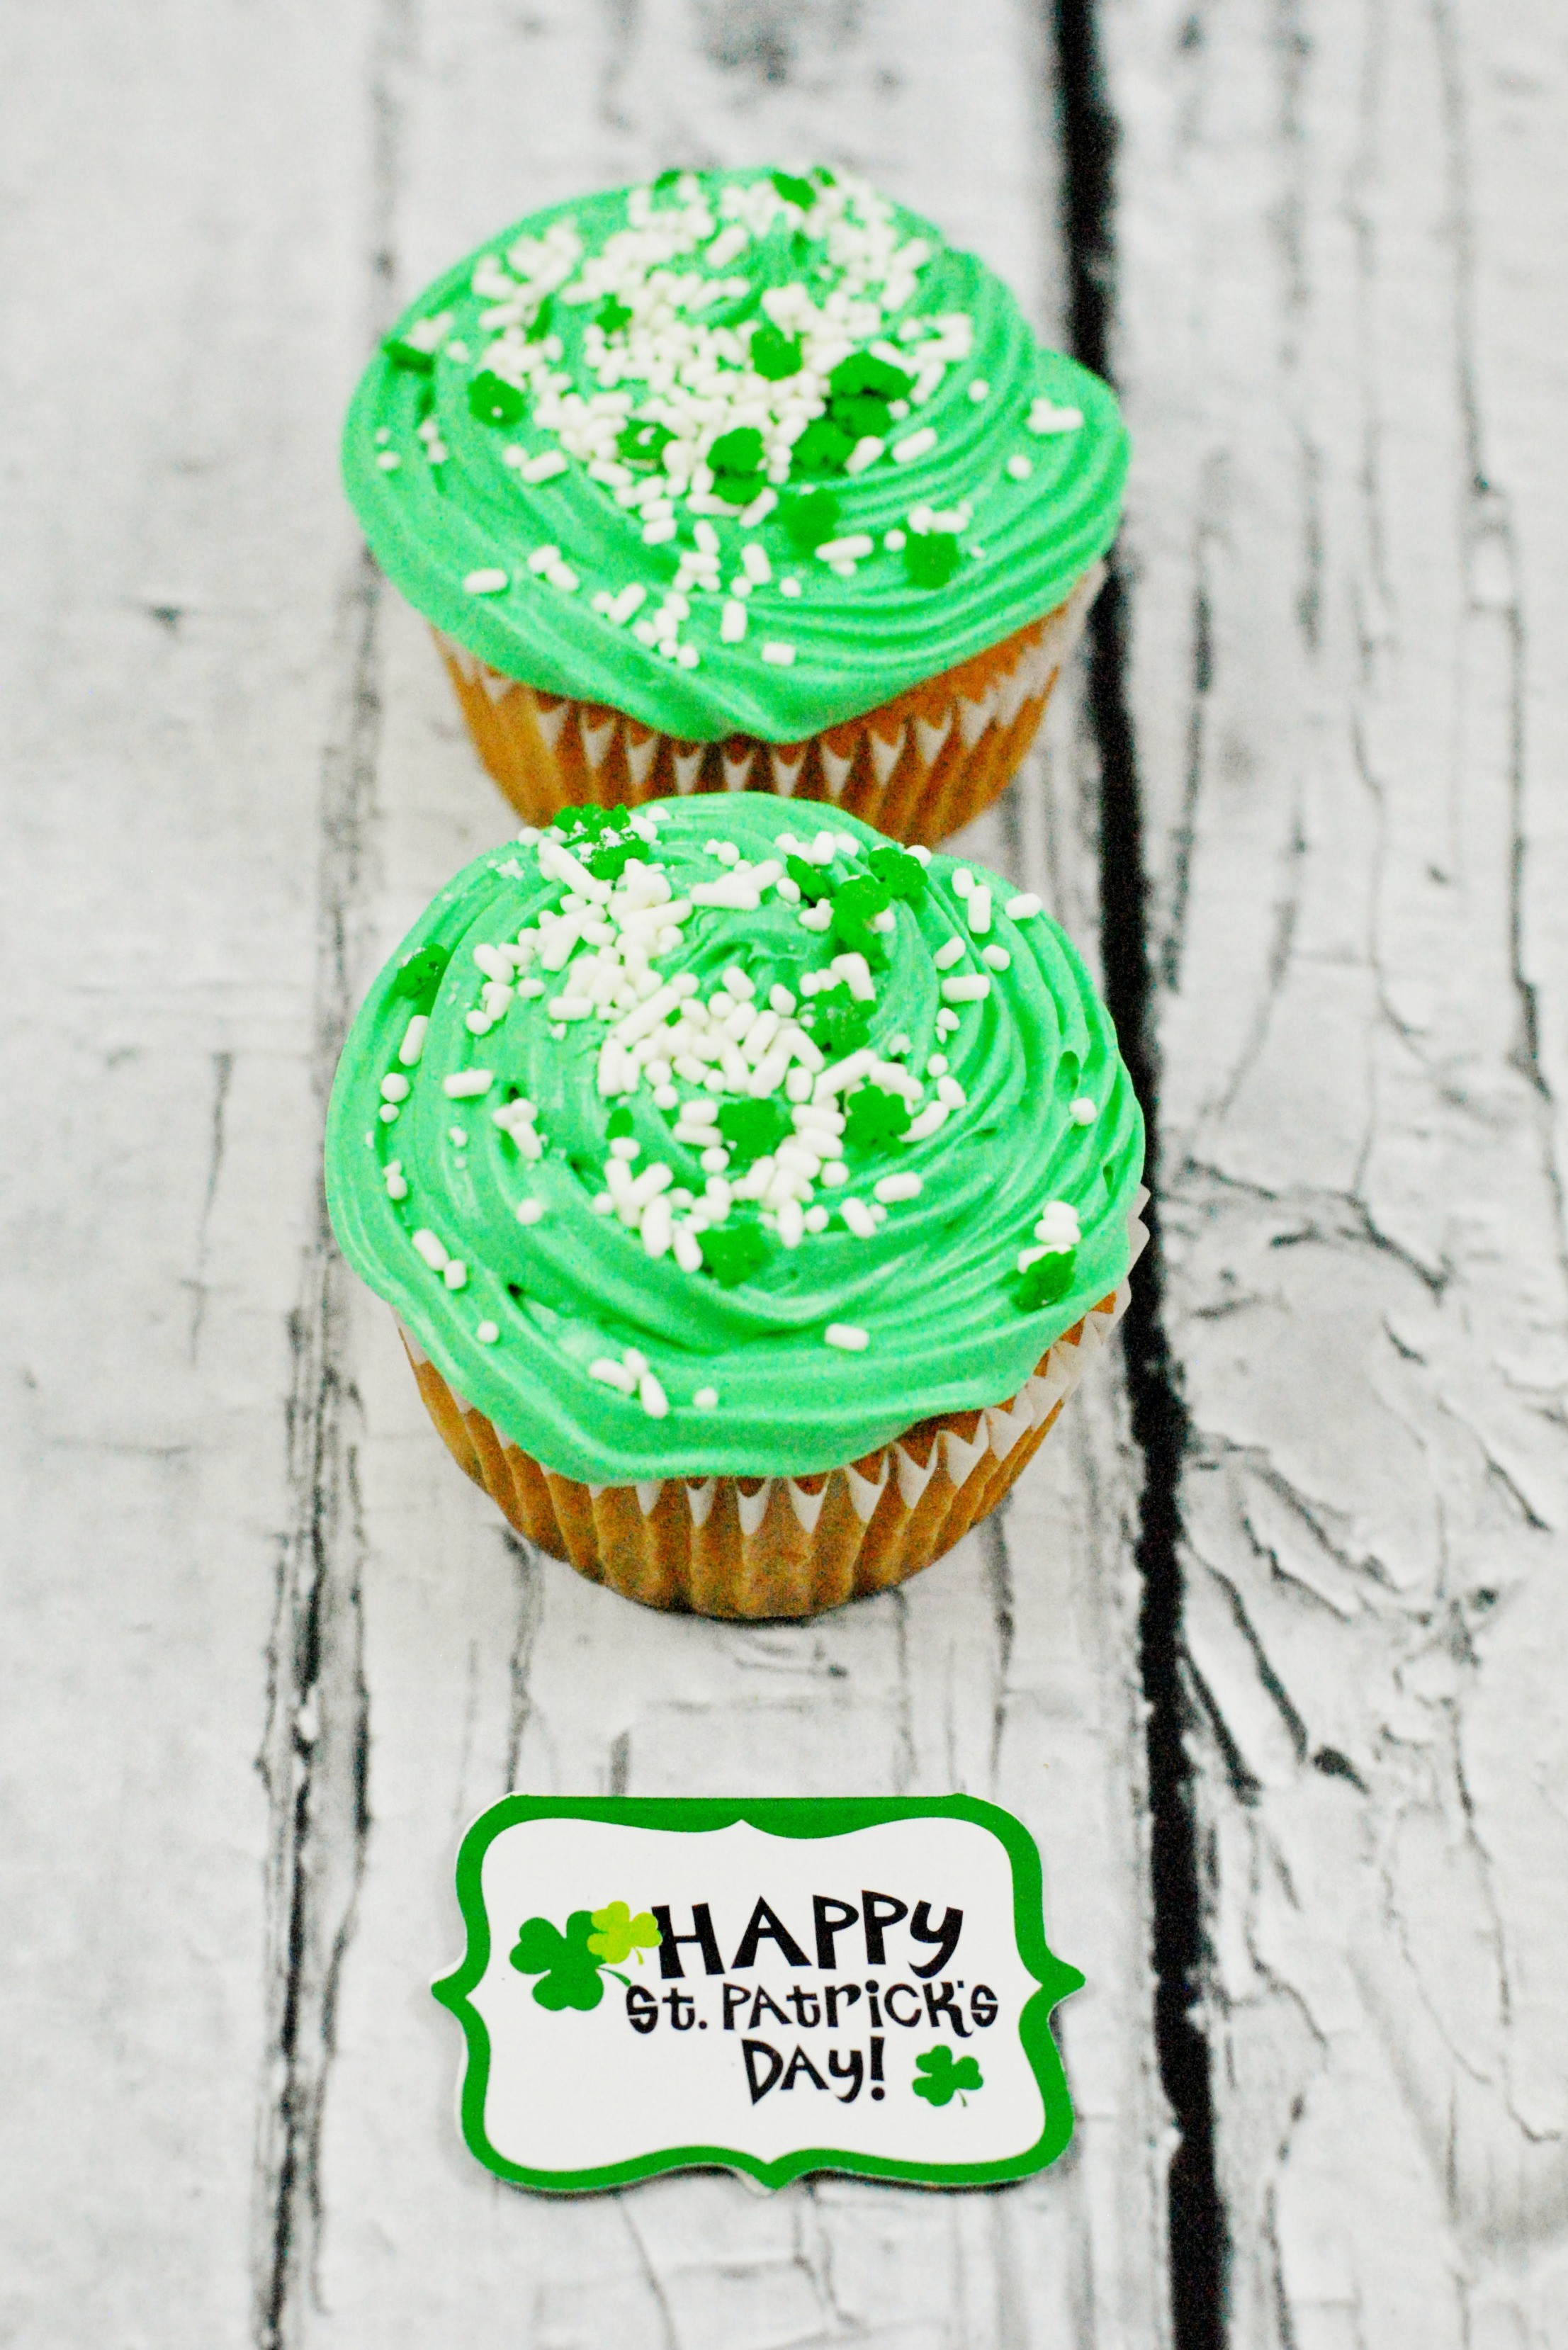 St. Patrick’s Day Surprise Inside Cupcake Recipe